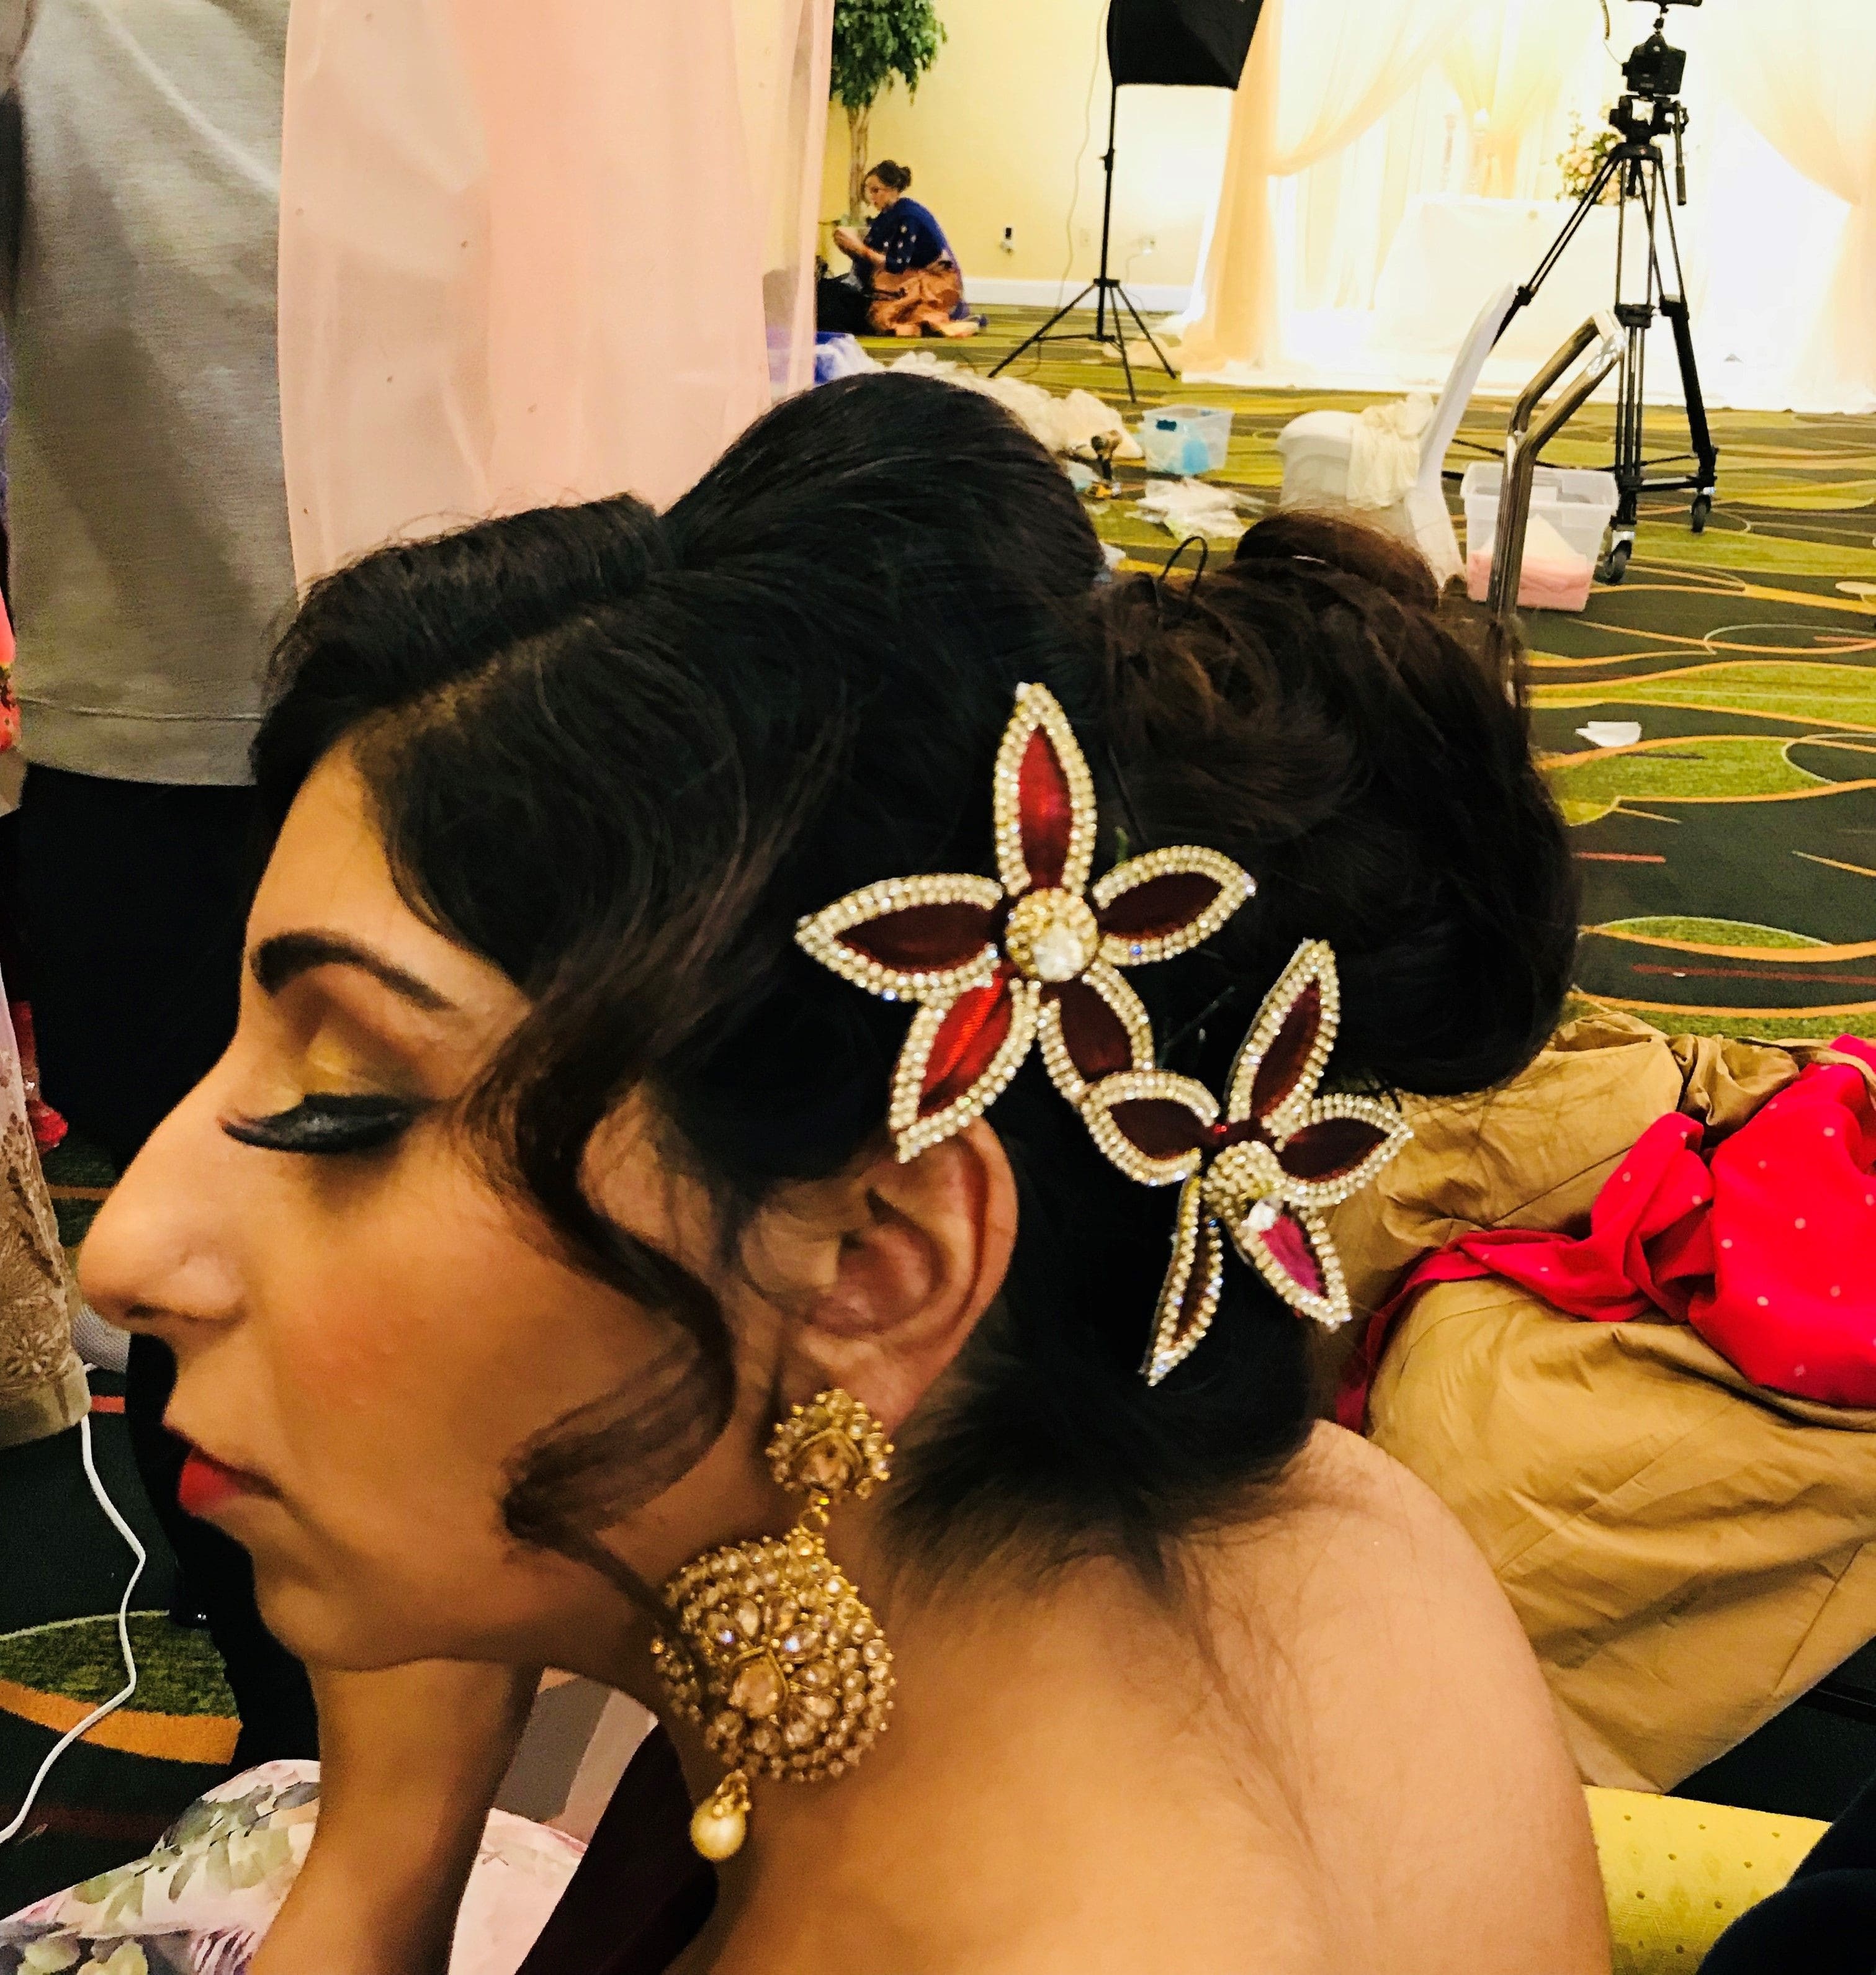 Top reviewd Indian Bridal Make-up Artist, Bridal hair stylist & Bridal Henna Artist  in Virginia / DC / MD ,(www.shruti-salon.com)